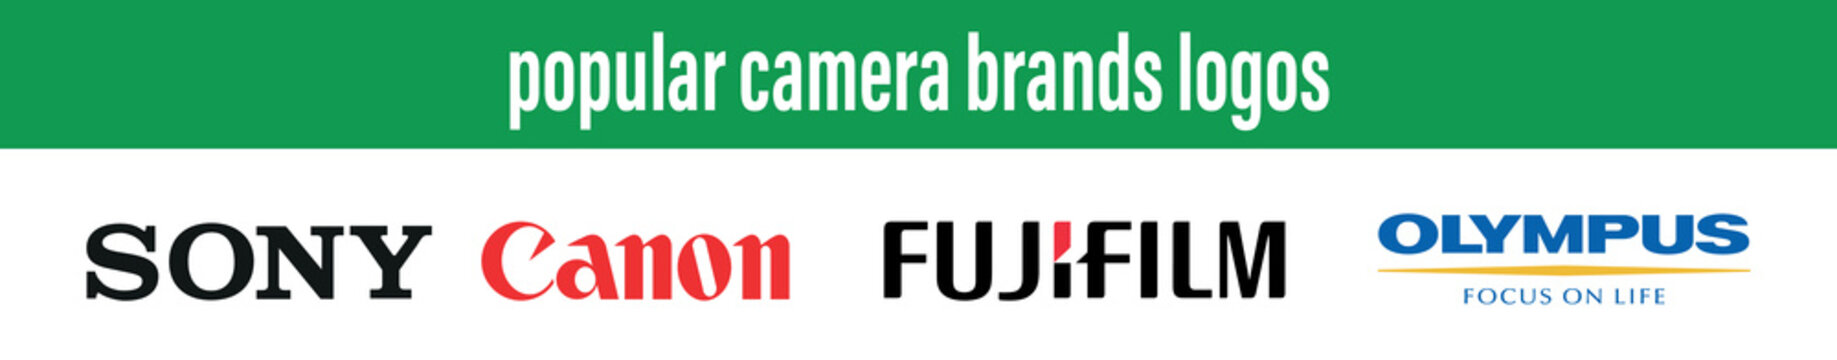 Popular camera brands logo collection vector